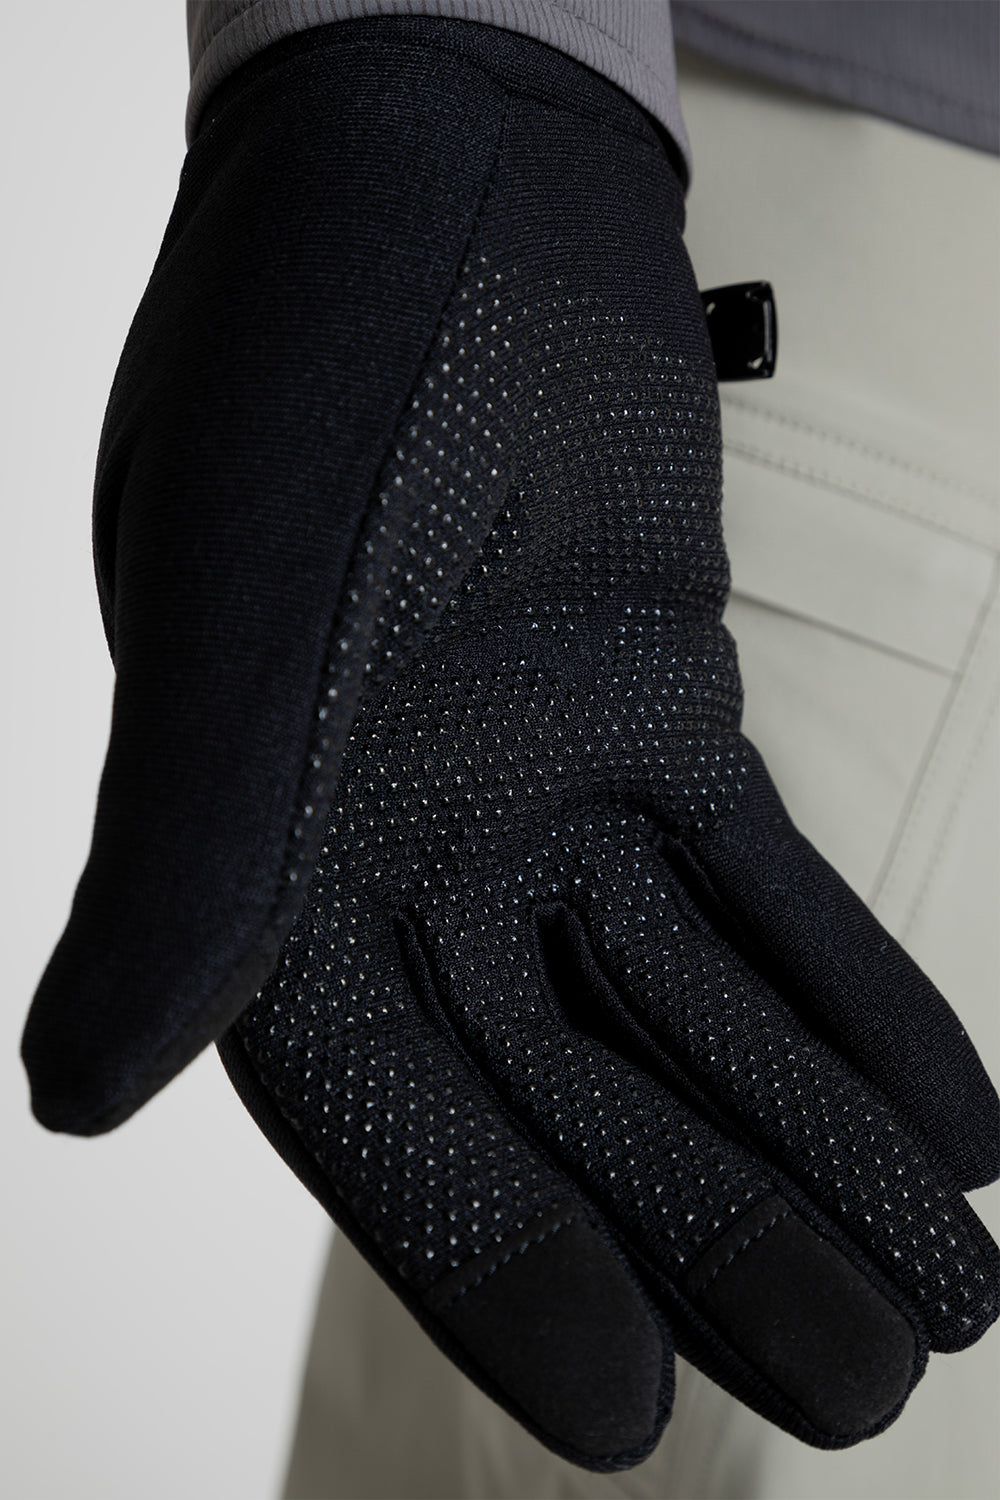 Cayl Powerstretch Glove in Black